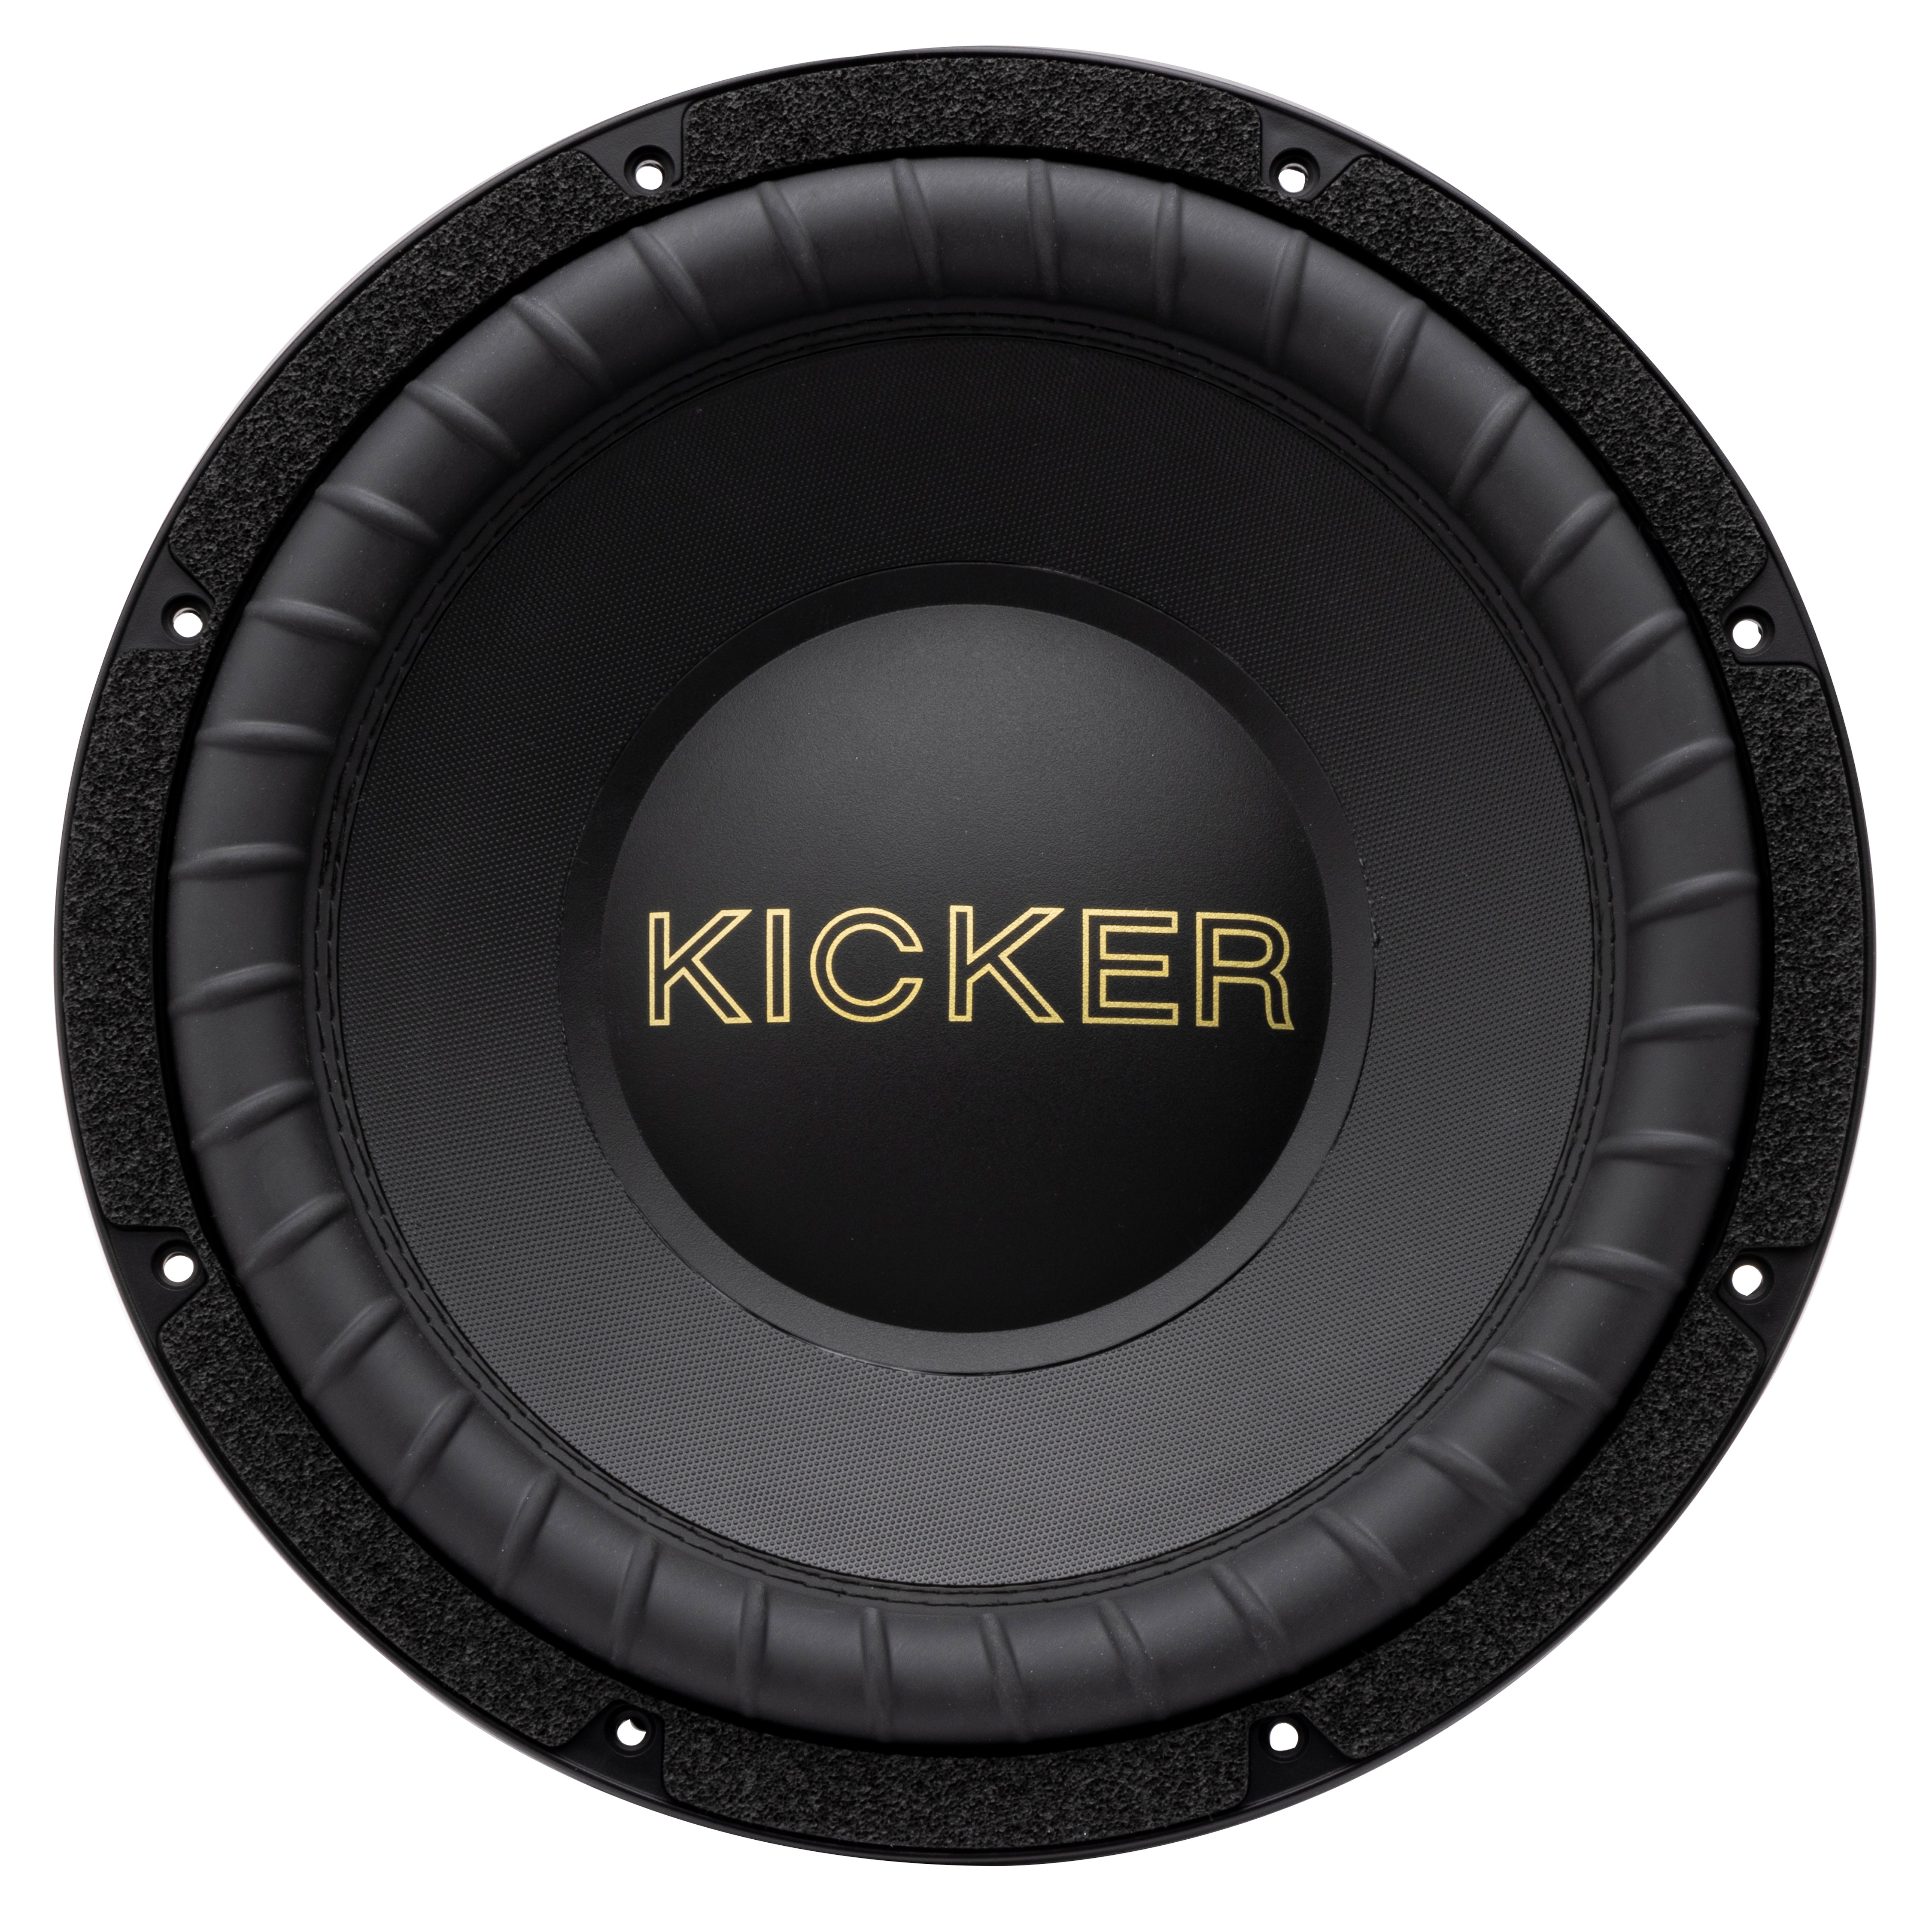 Kicker, Kicker GOLD104, Gold 50th Anniversary 10" DVC 4 Ohm Subwoofer, 400W (50GOLD104)